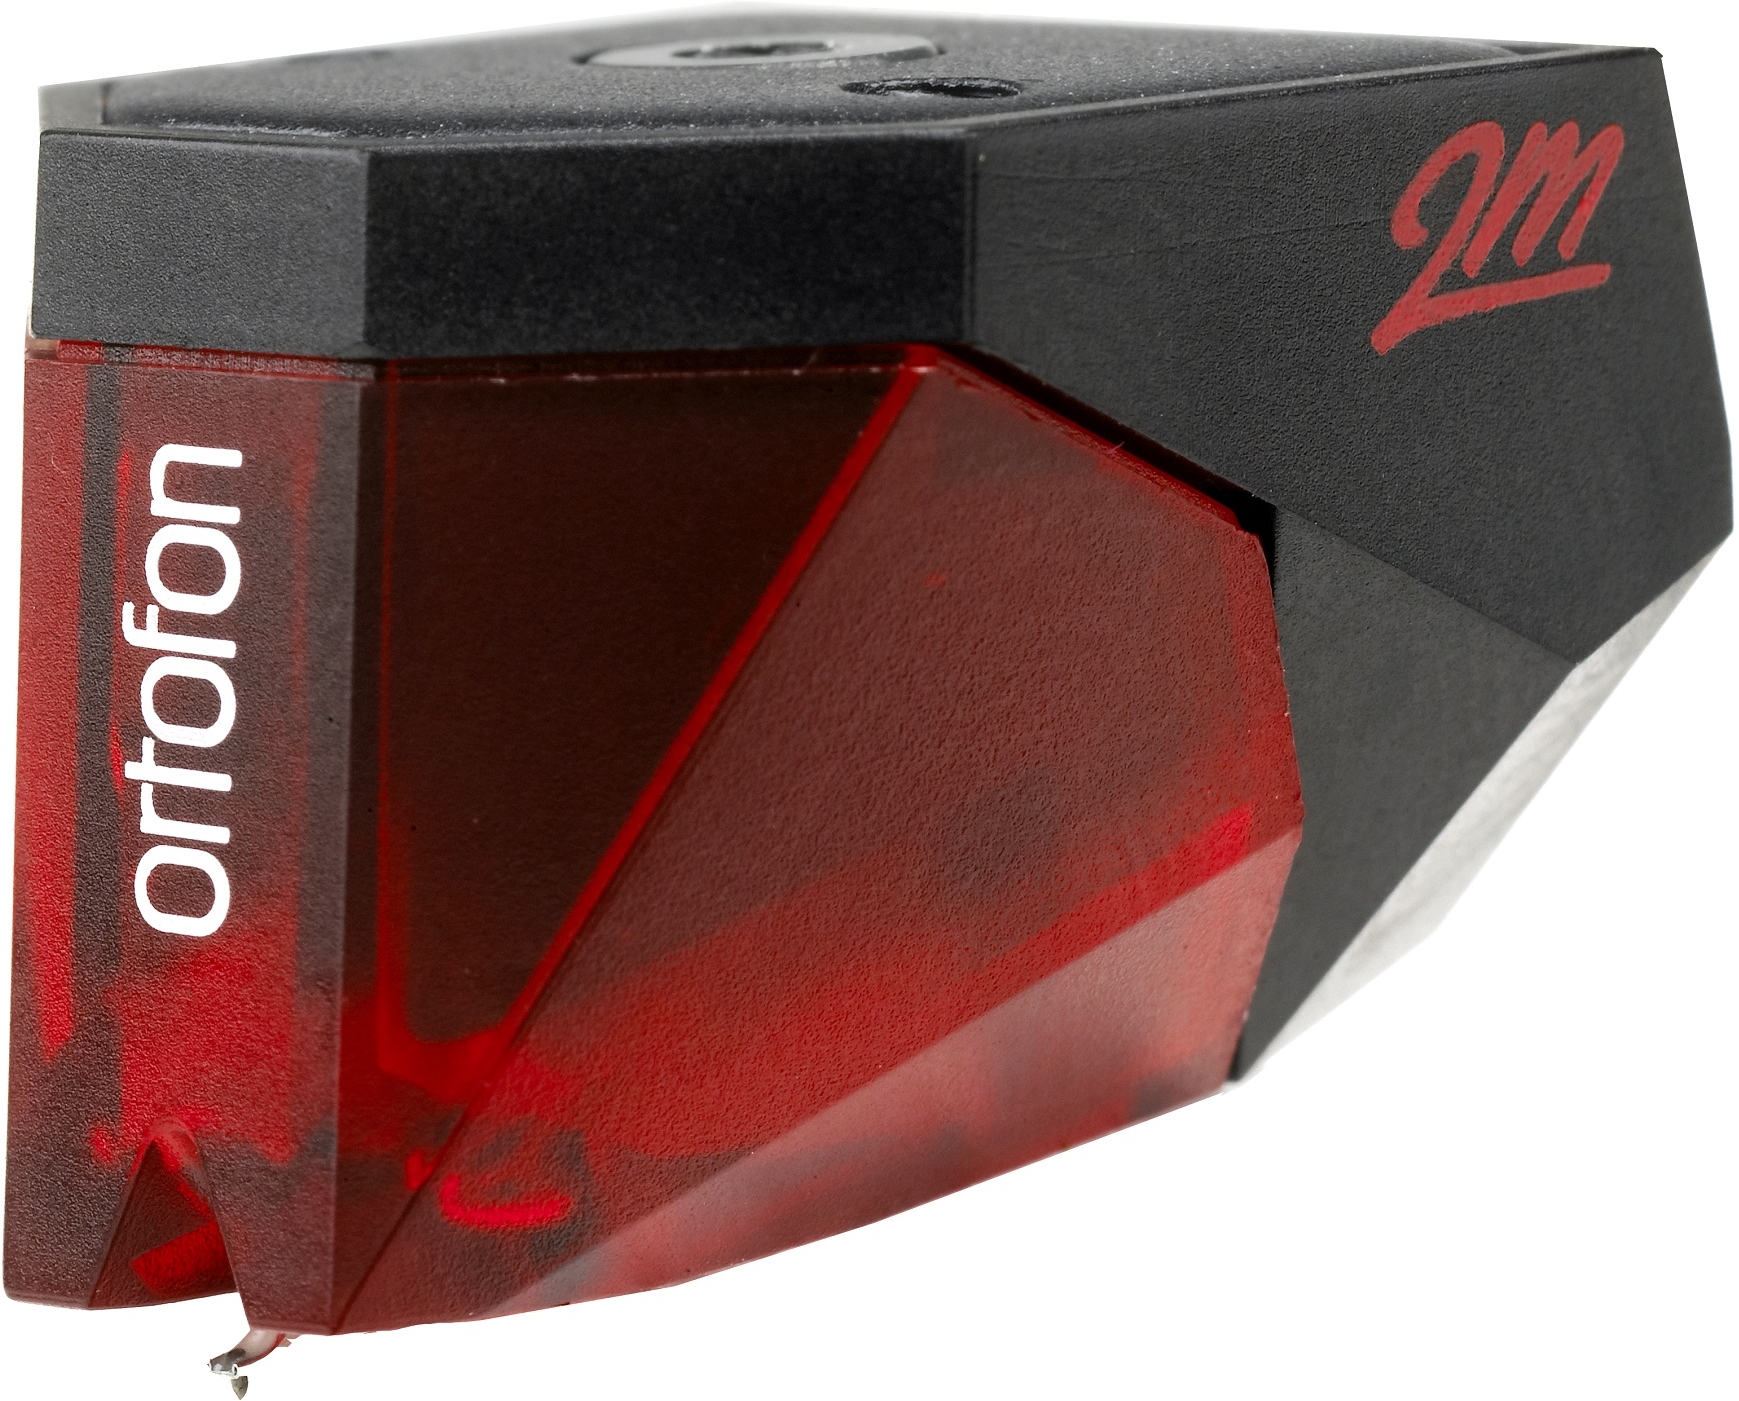 Hifi 2M Red MM Cartridge